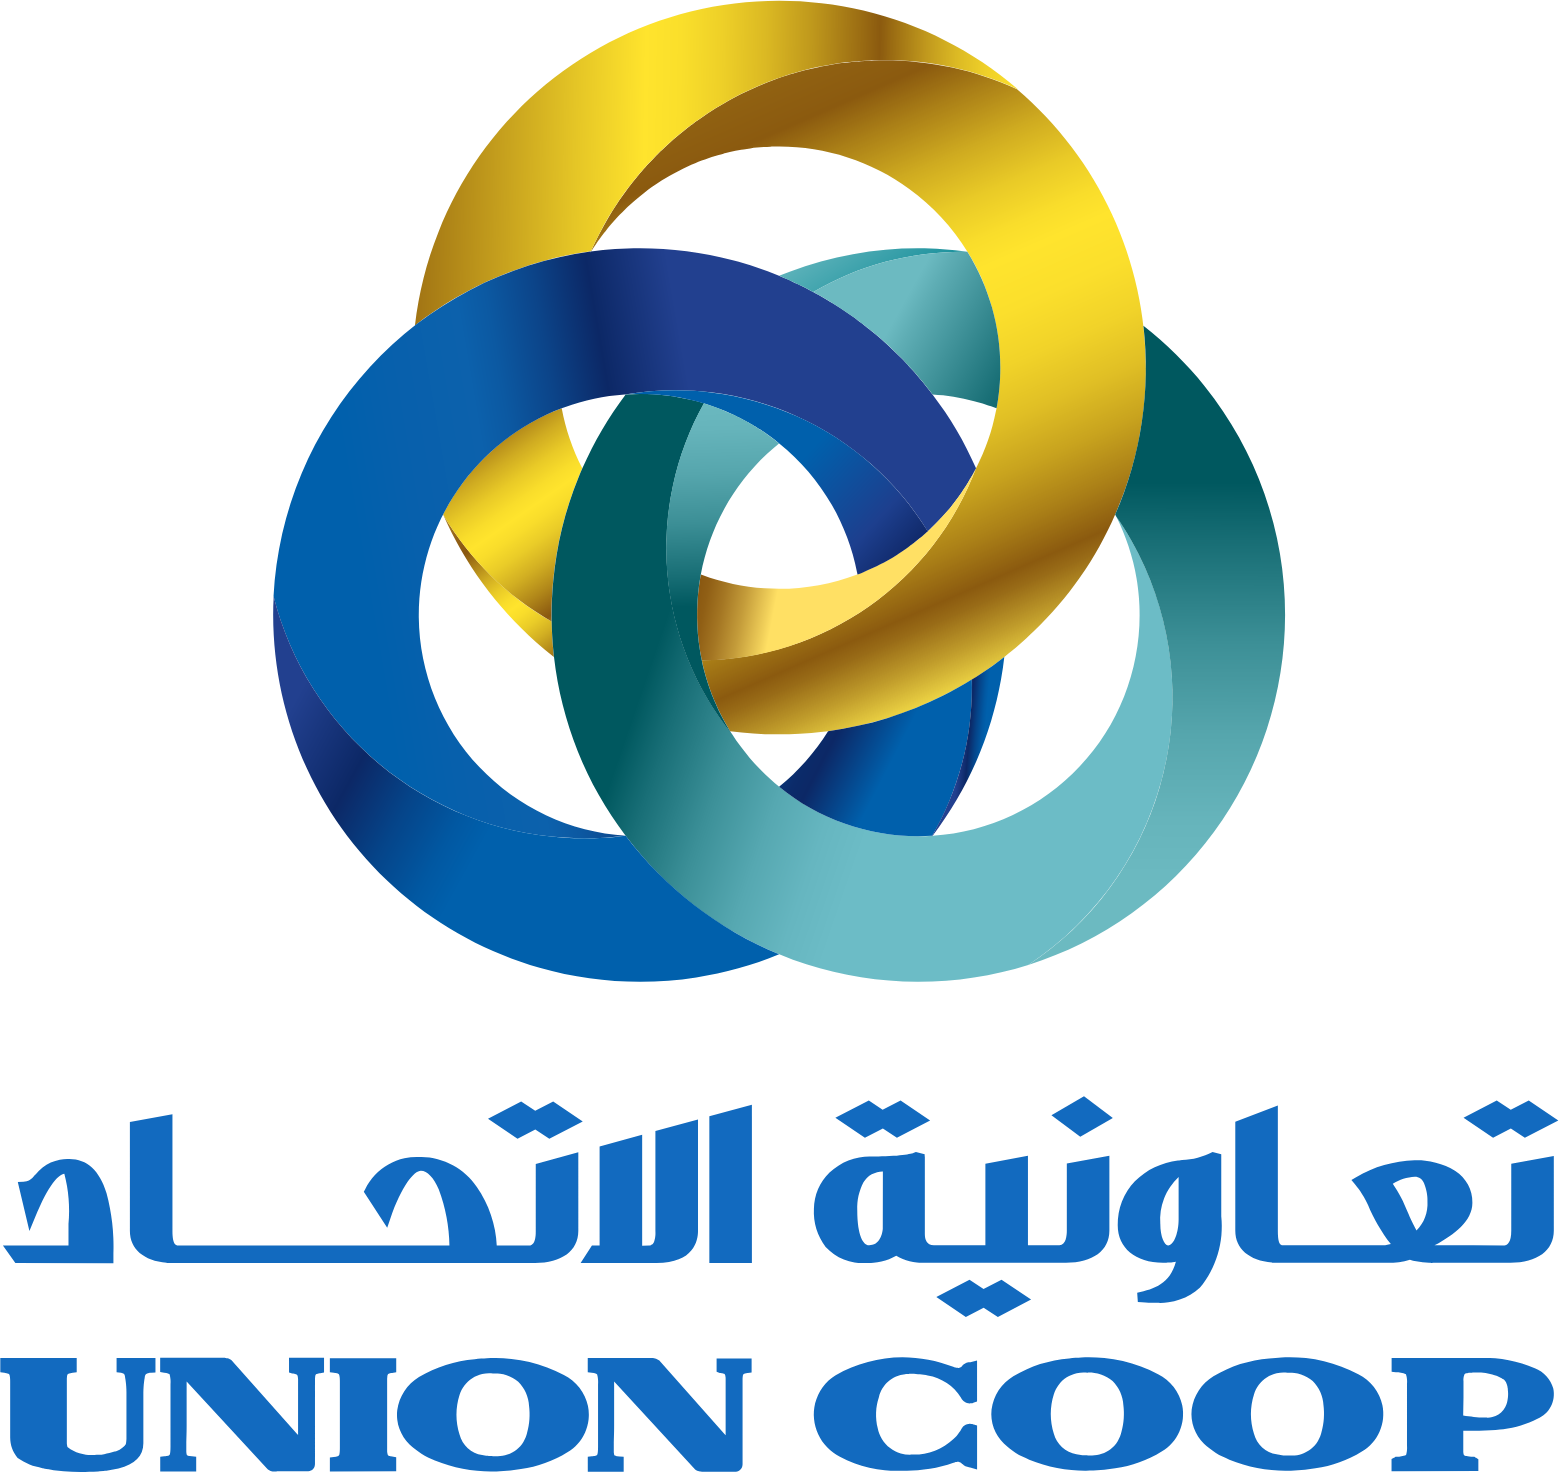 Union Coop logo large (transparent PNG)